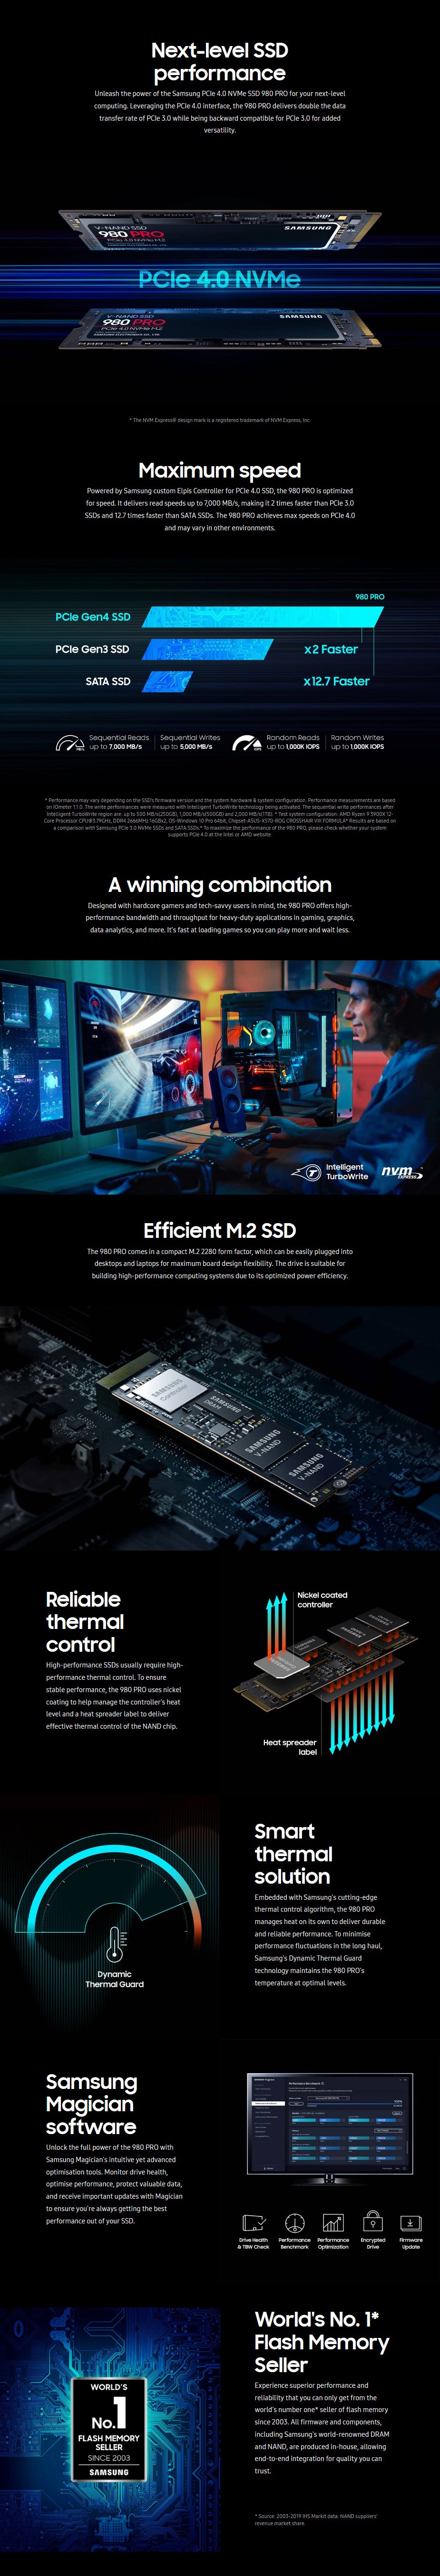 Samsung 980 Pro 250GB NVMe 1.3c M.2 (2280) V-NAND 3-Bit MLC SSD - MZ-V8P250BW - Overview 1